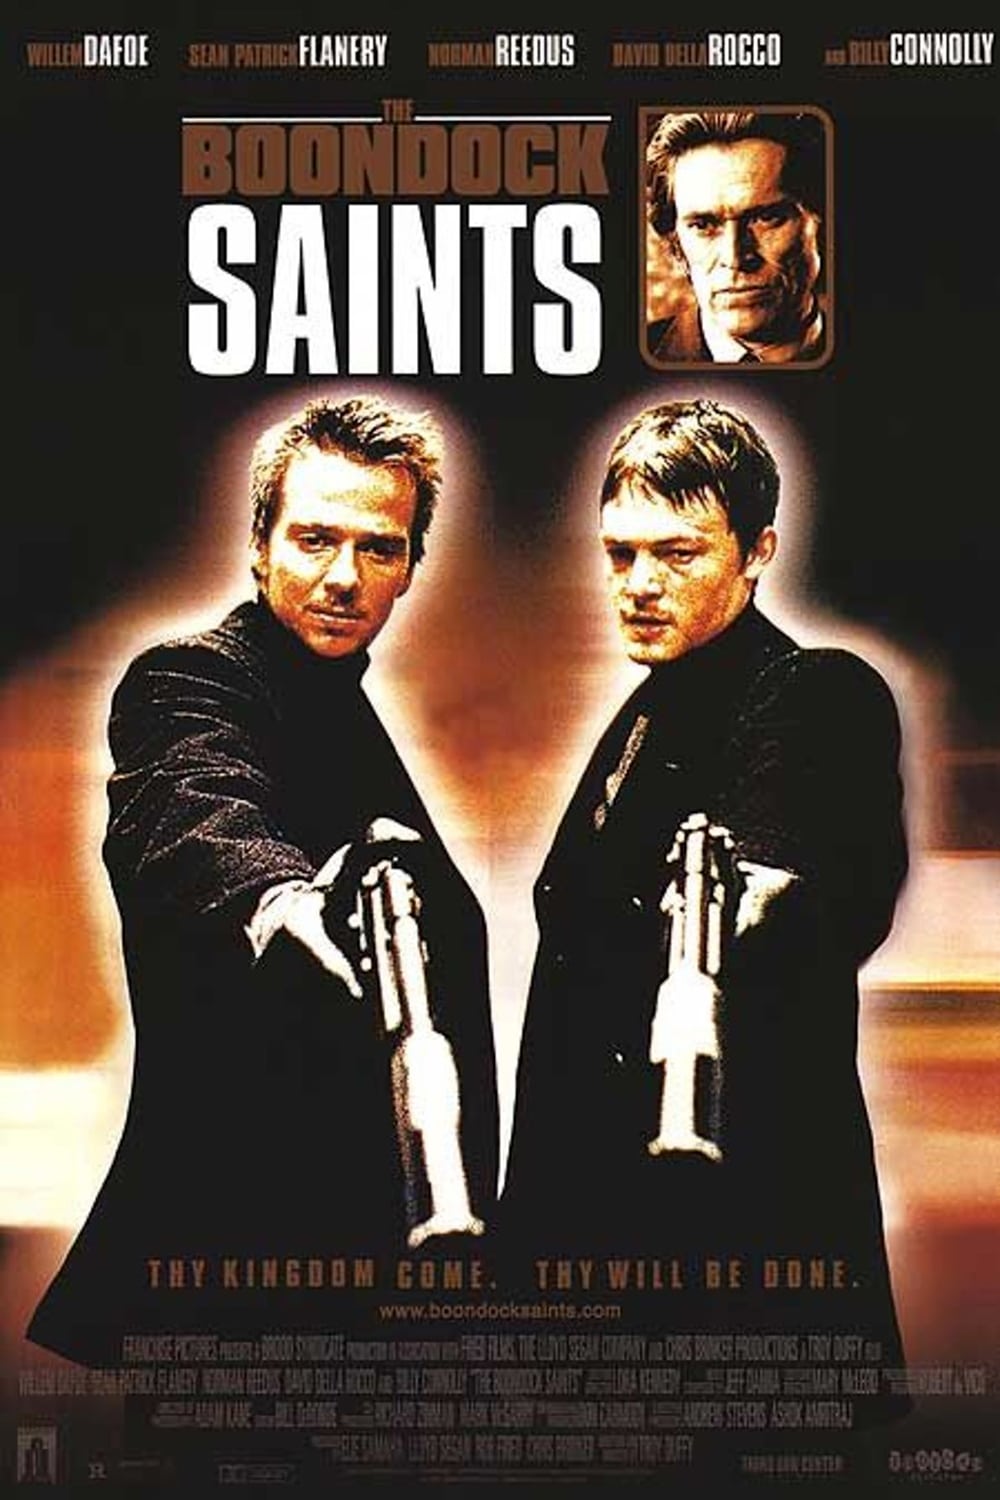 EN - The Boondock Saints 1 (1999)